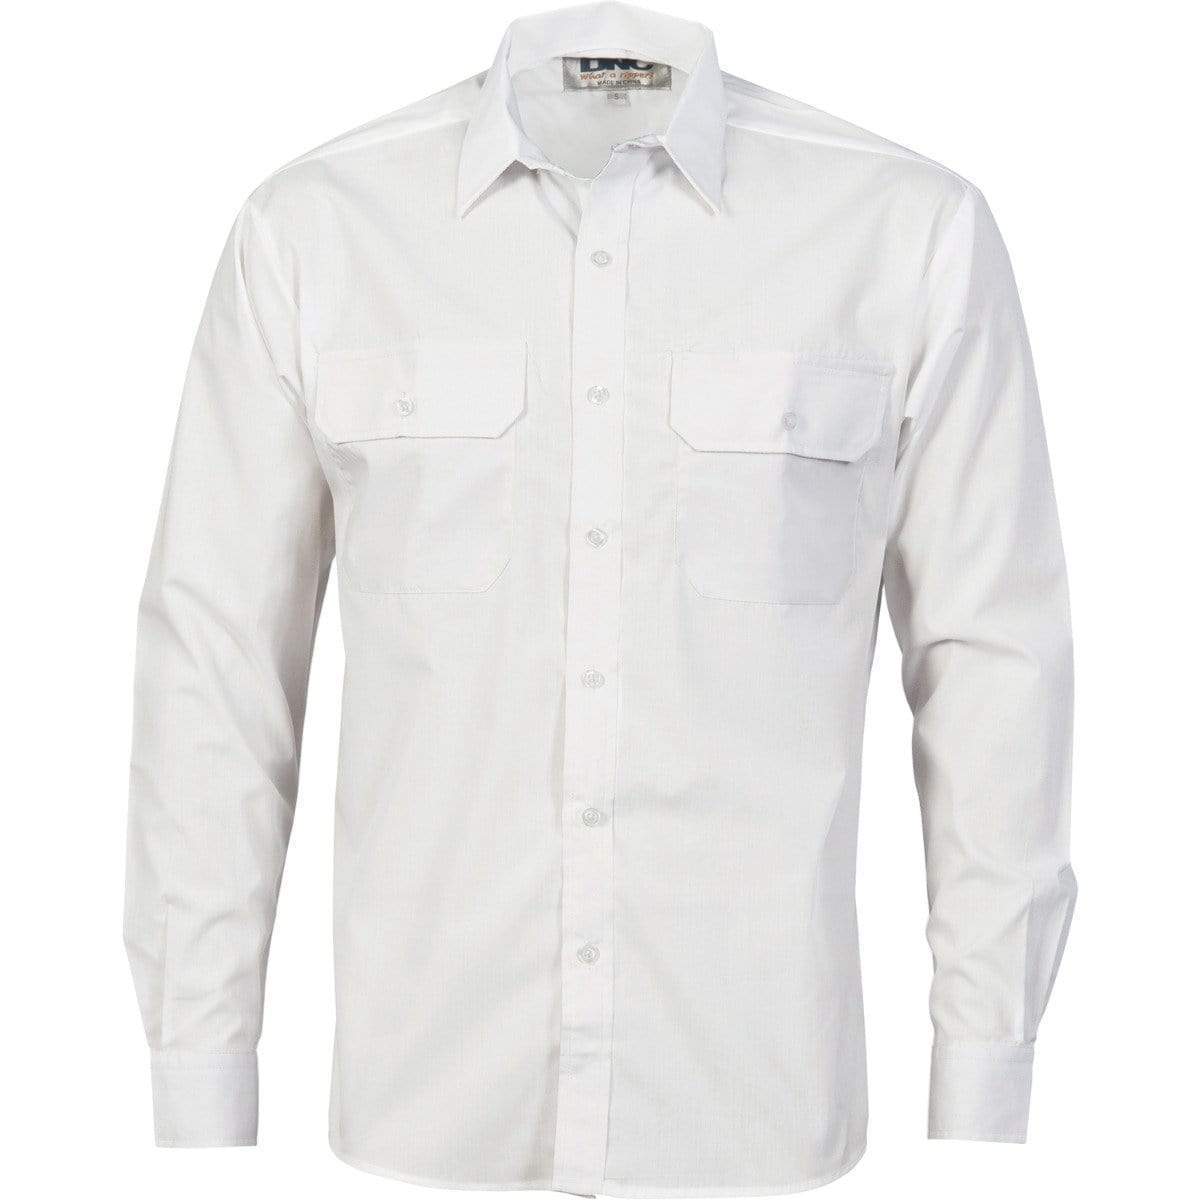 DNC Workwear Work Wear White / S DNC WORKWEAR Polyester Cotton Long Sleeve Work Shirt 3212